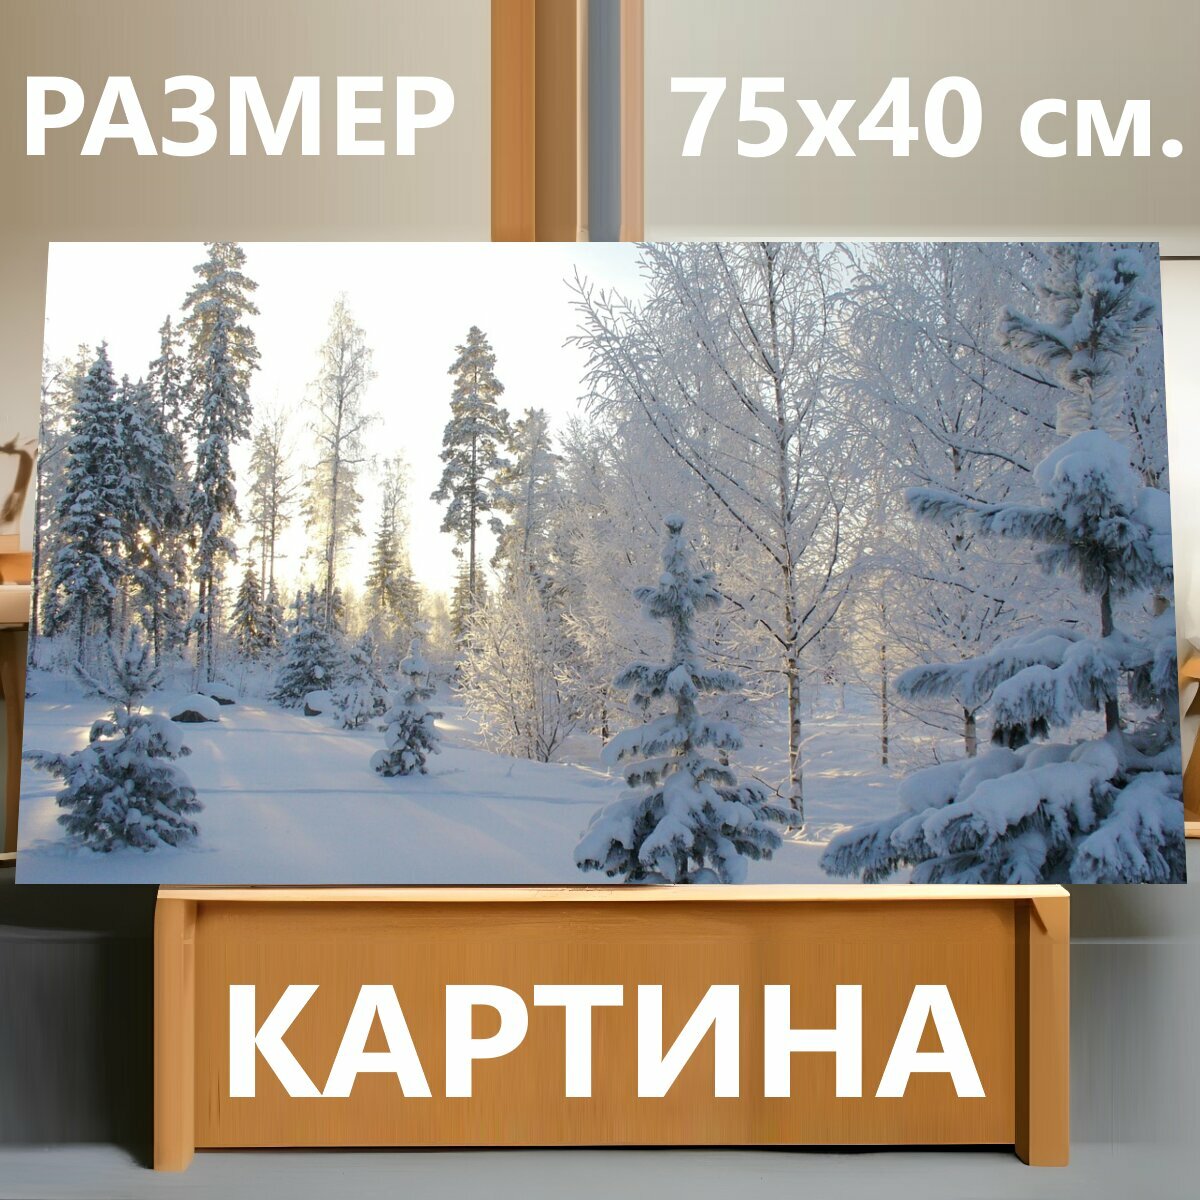 Картина на холсте "Зима, лес, зимний лес" на подрамнике 75х40 см. для интерьера